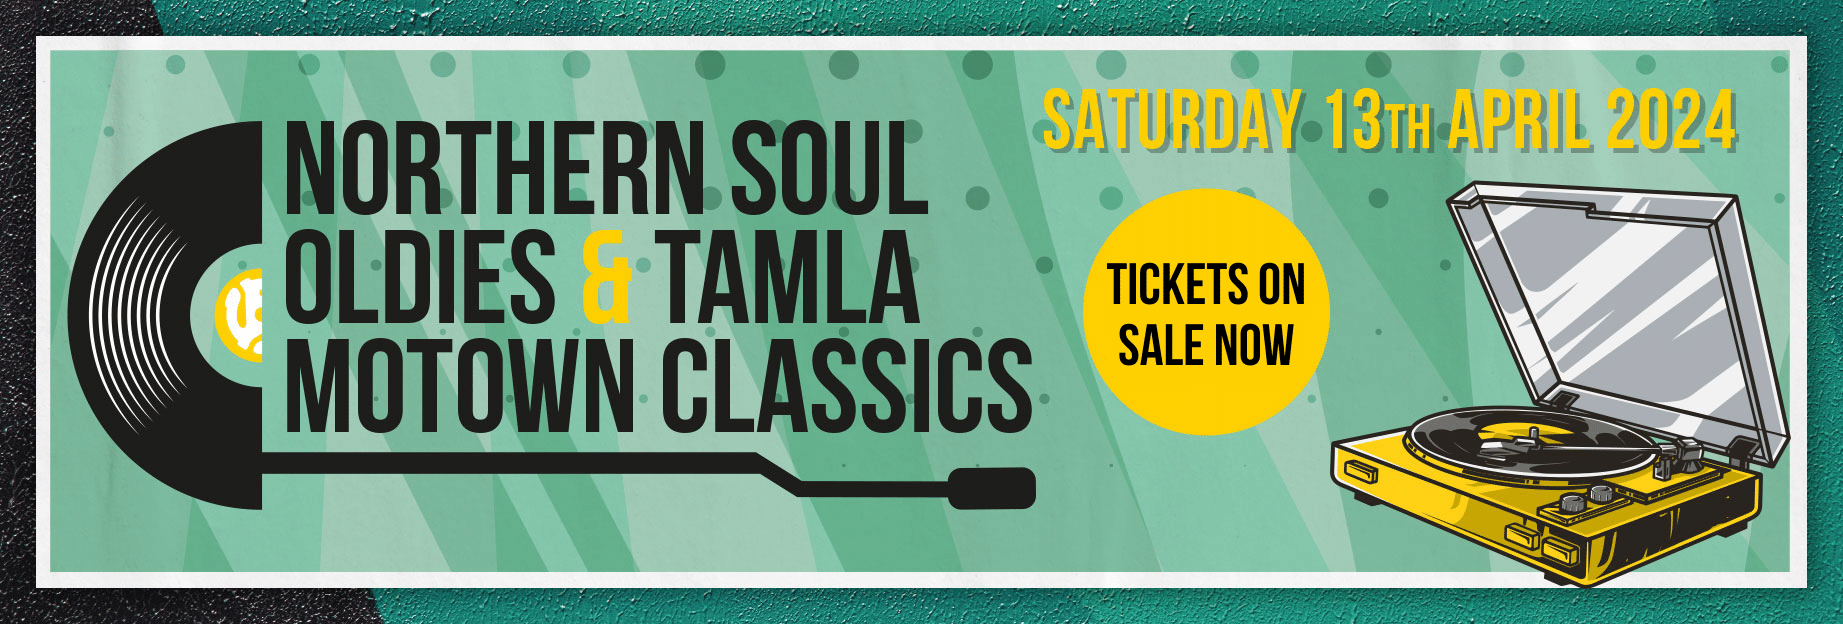 Northern Soul Oldies & Tamla Motown Classics